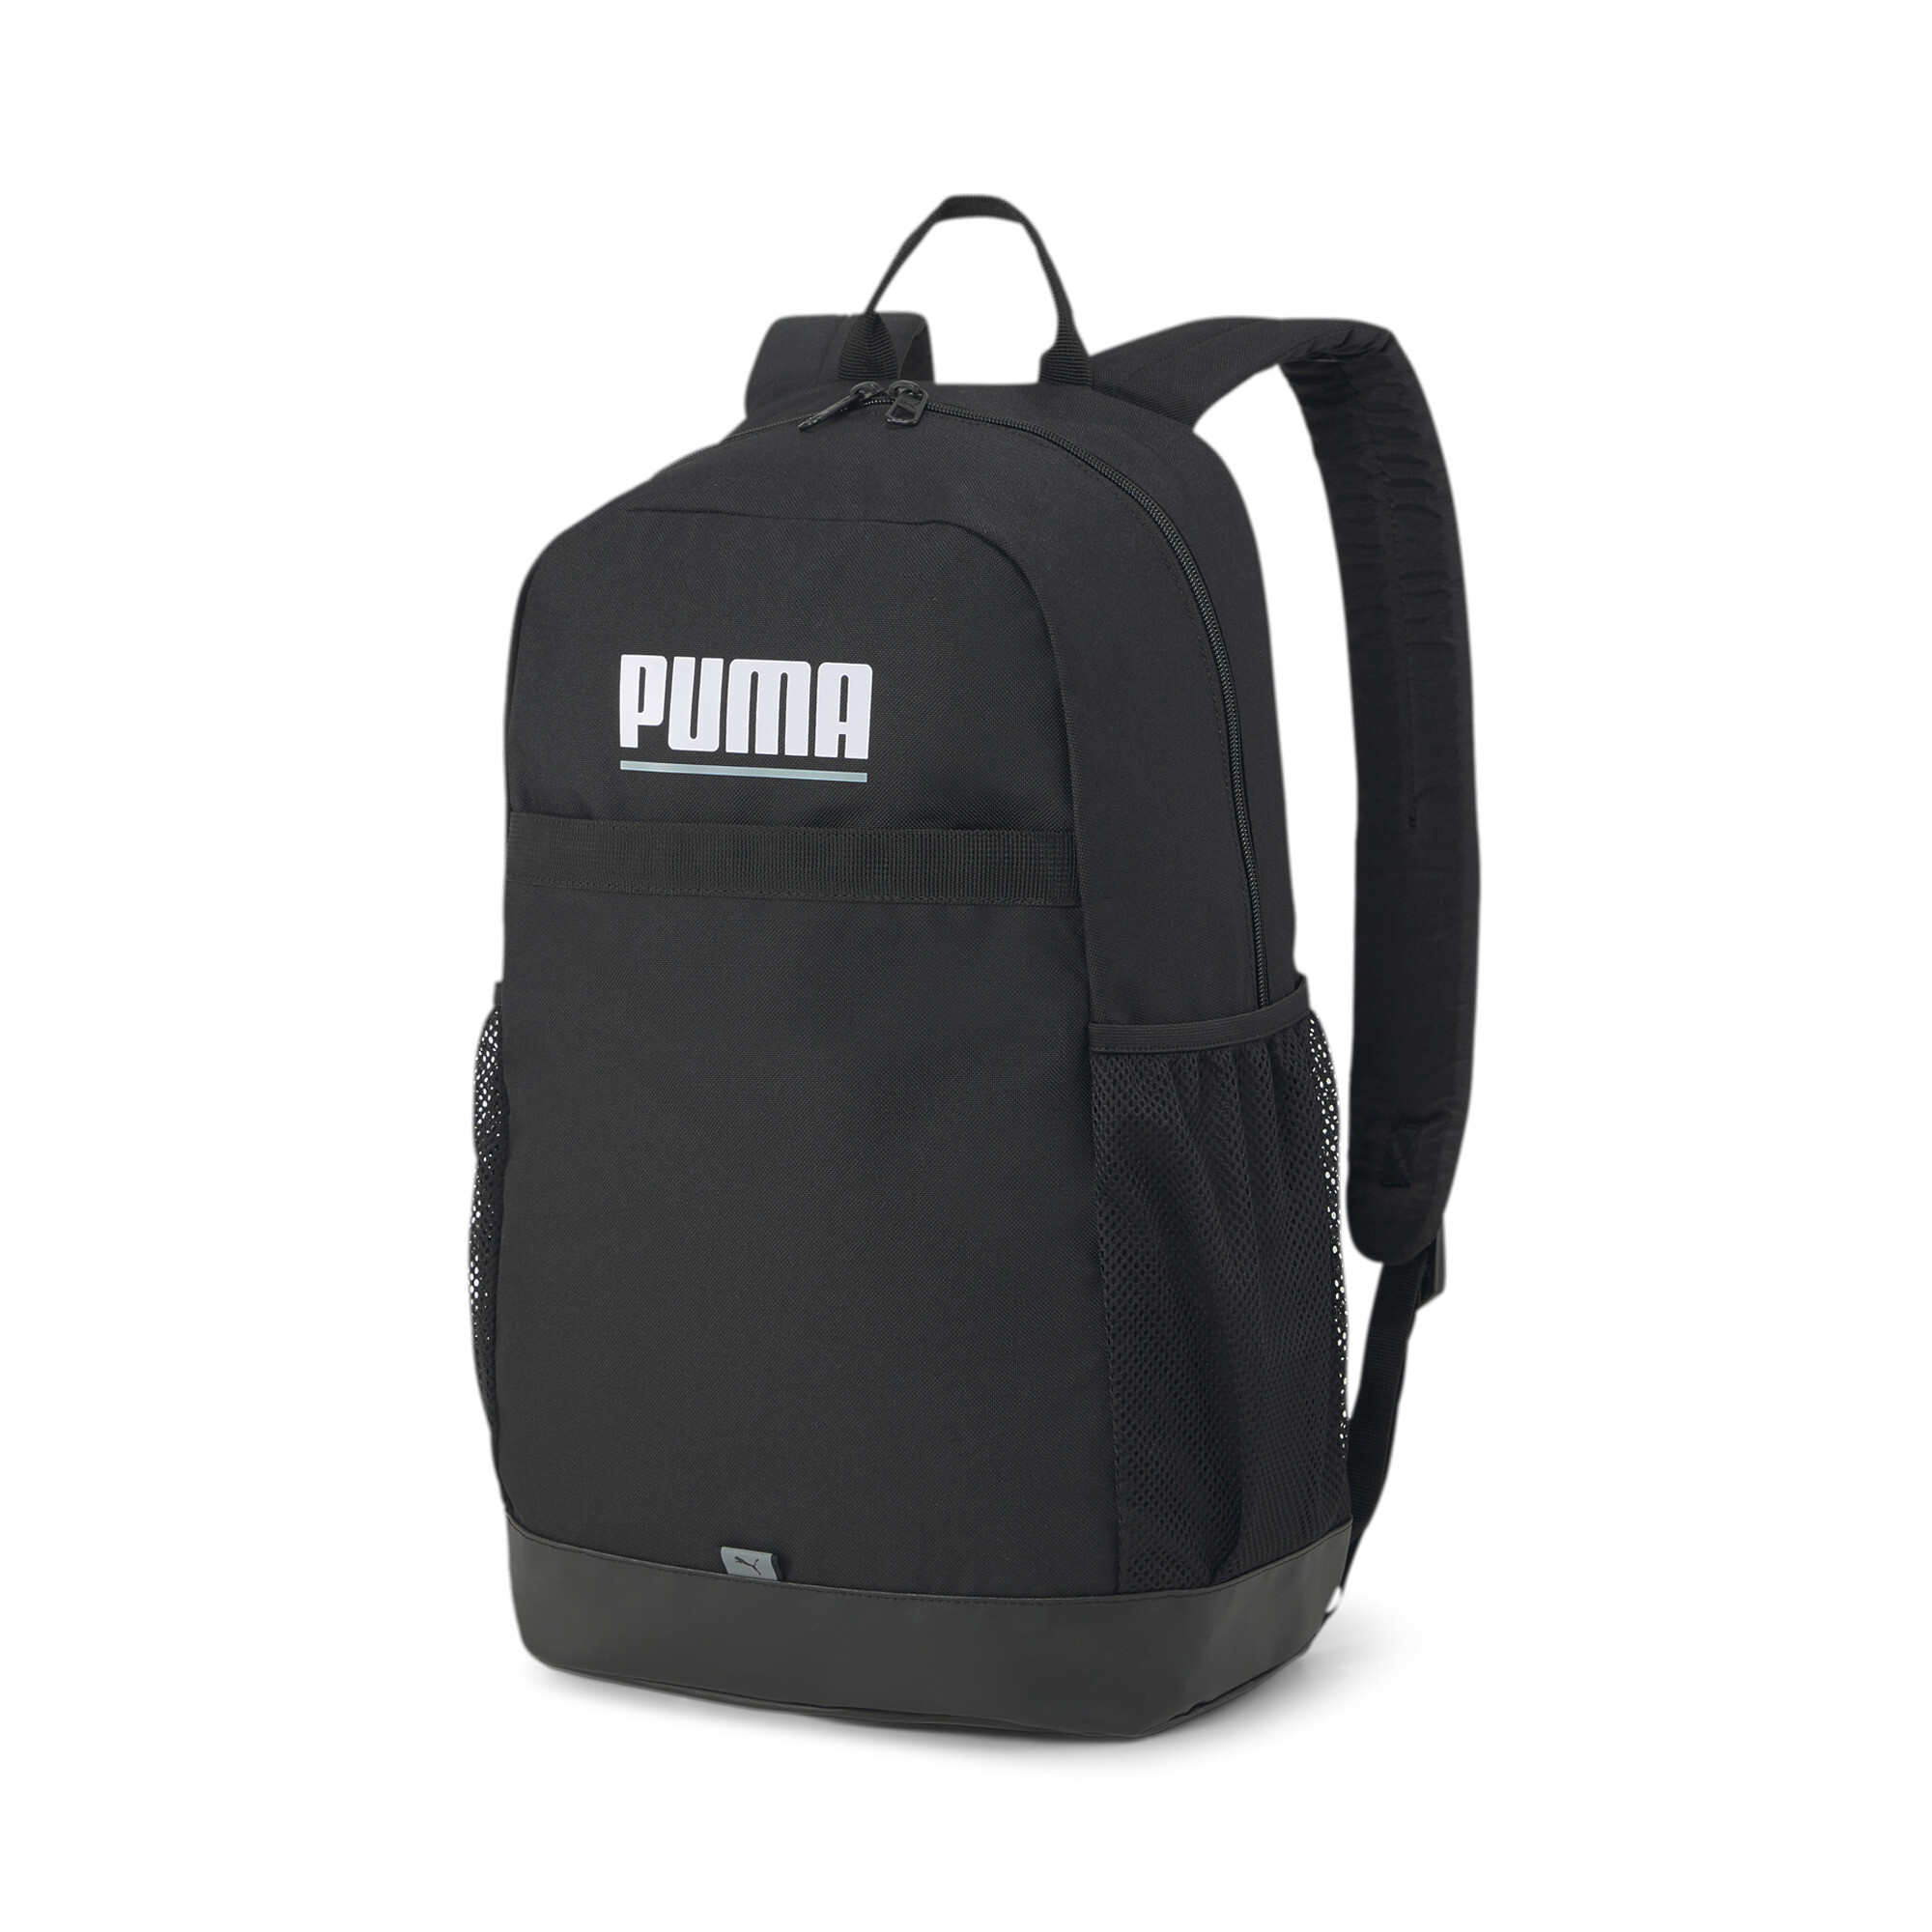 Puma Plus Backpack, Black, Accessories